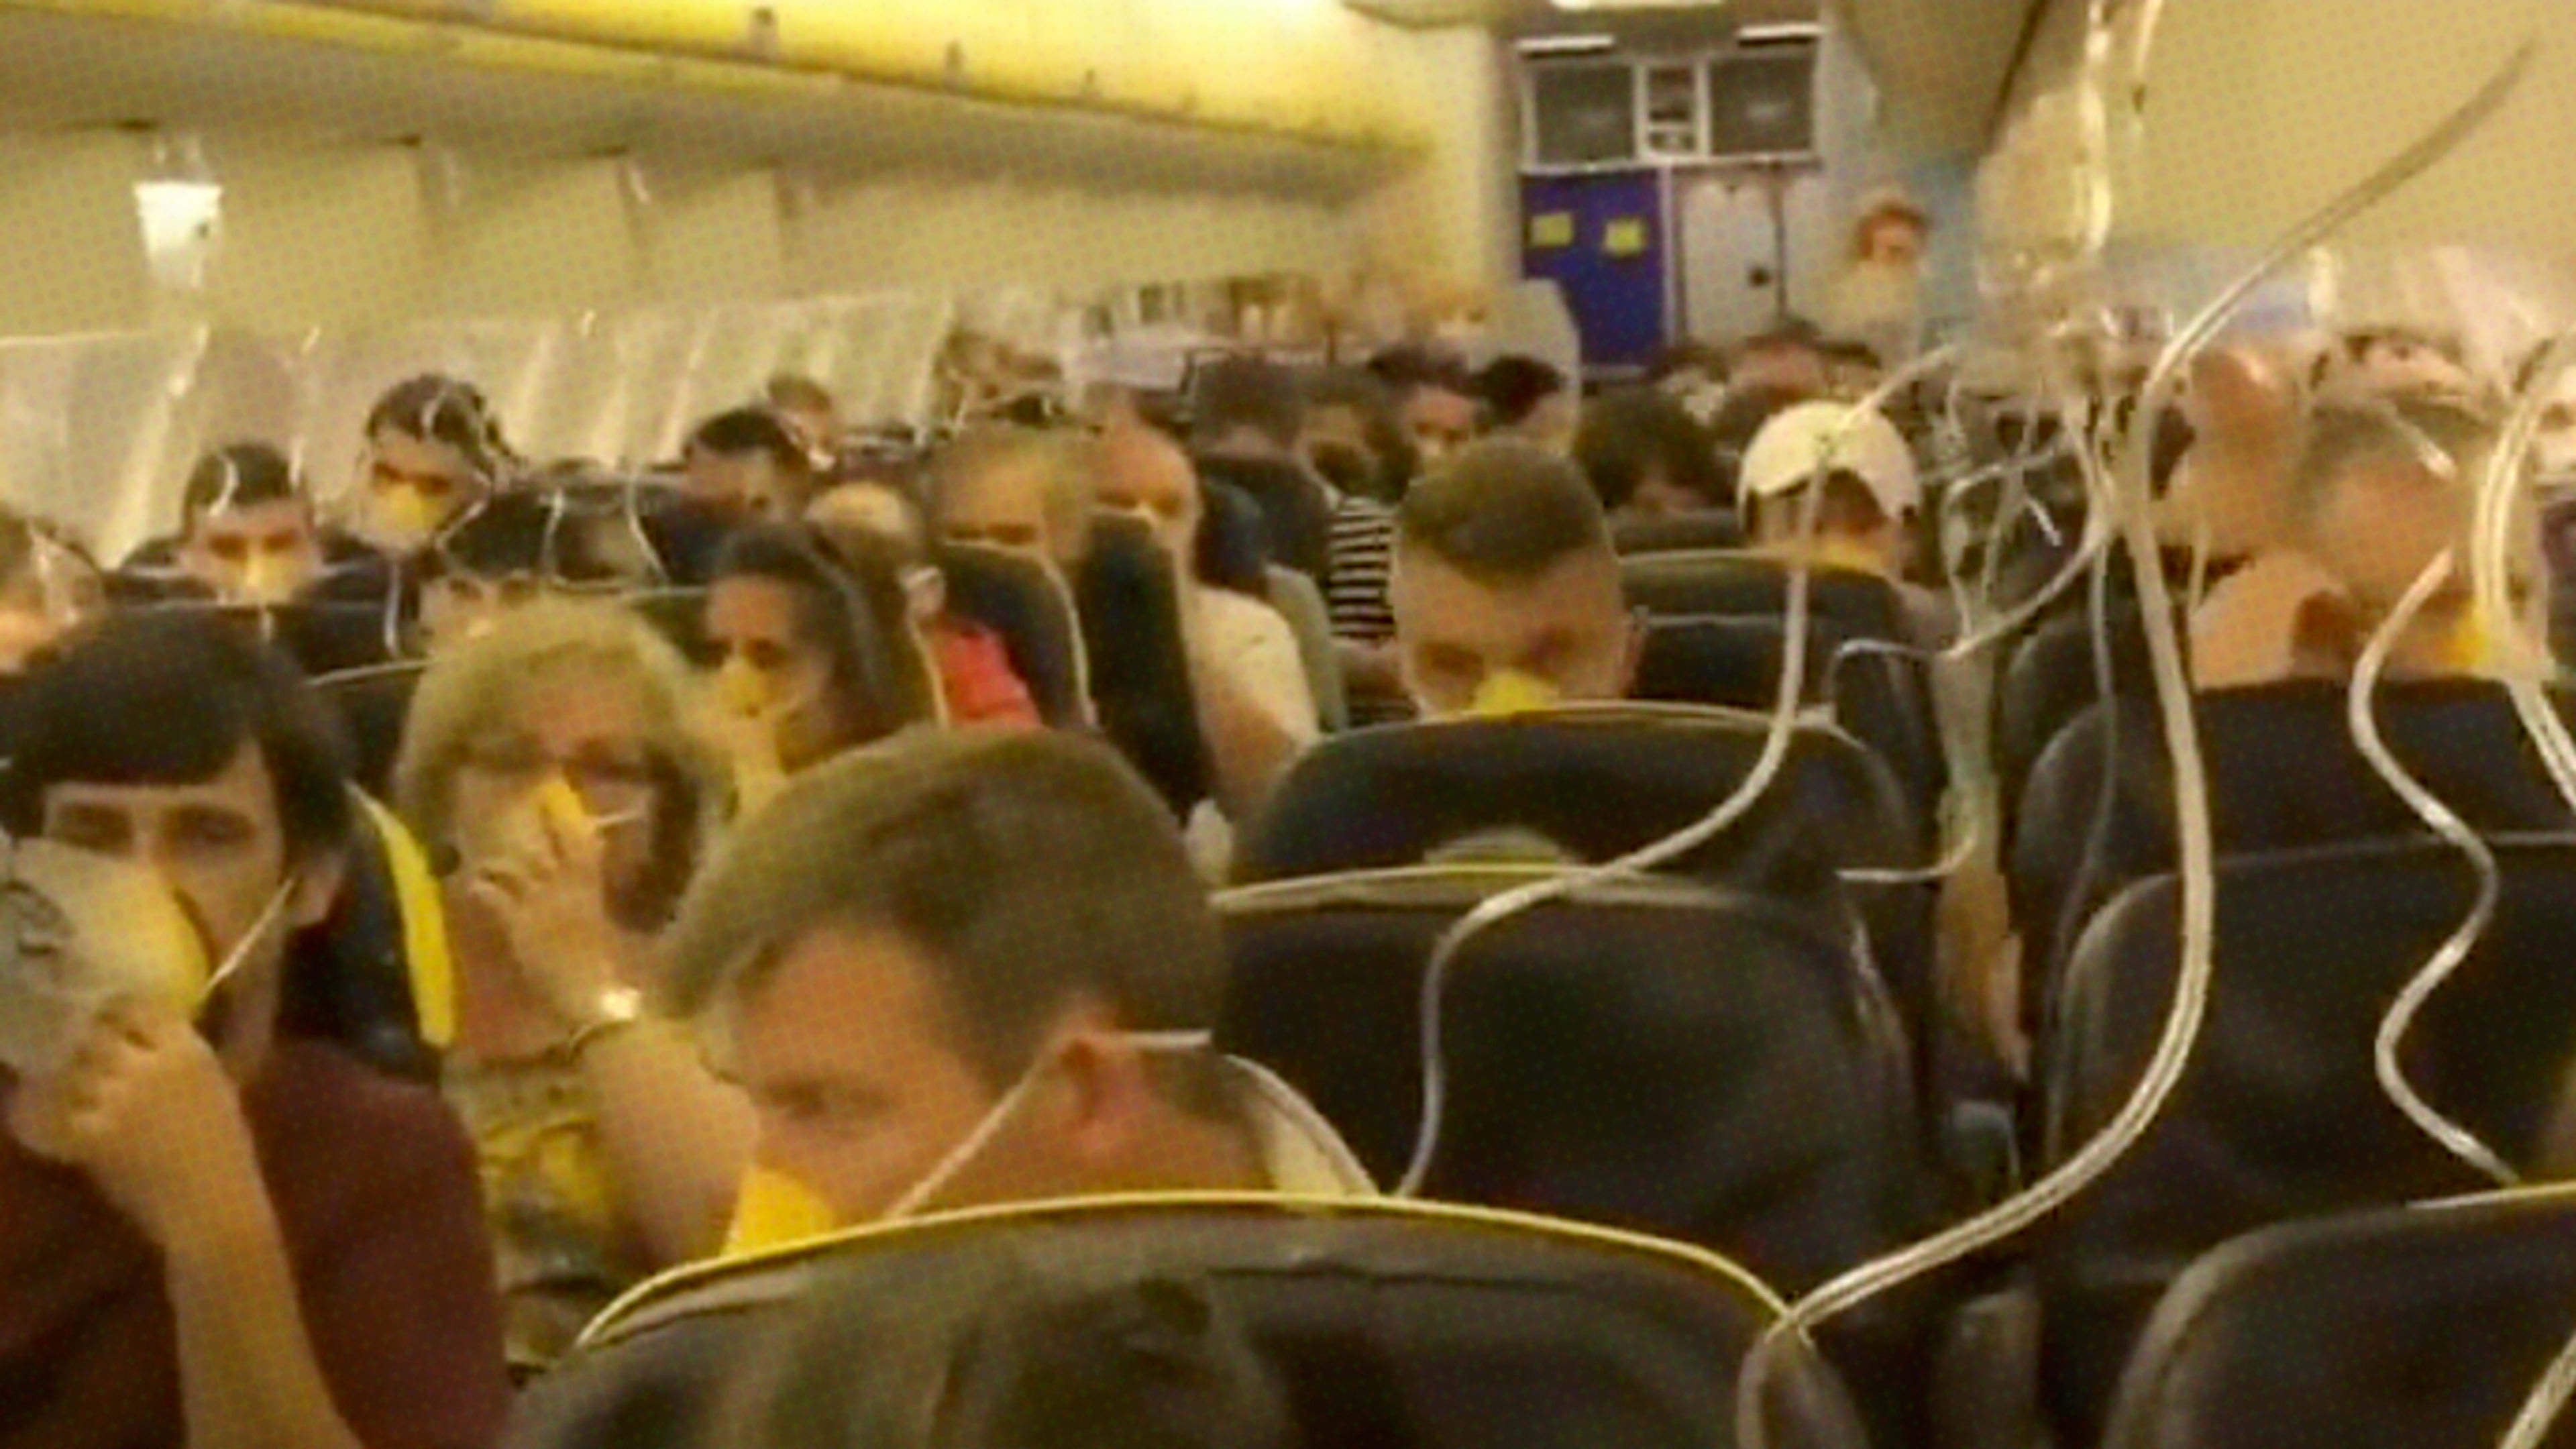 Terrifying Ryanair flight video shows oxygen masks drop during cabin depressurization